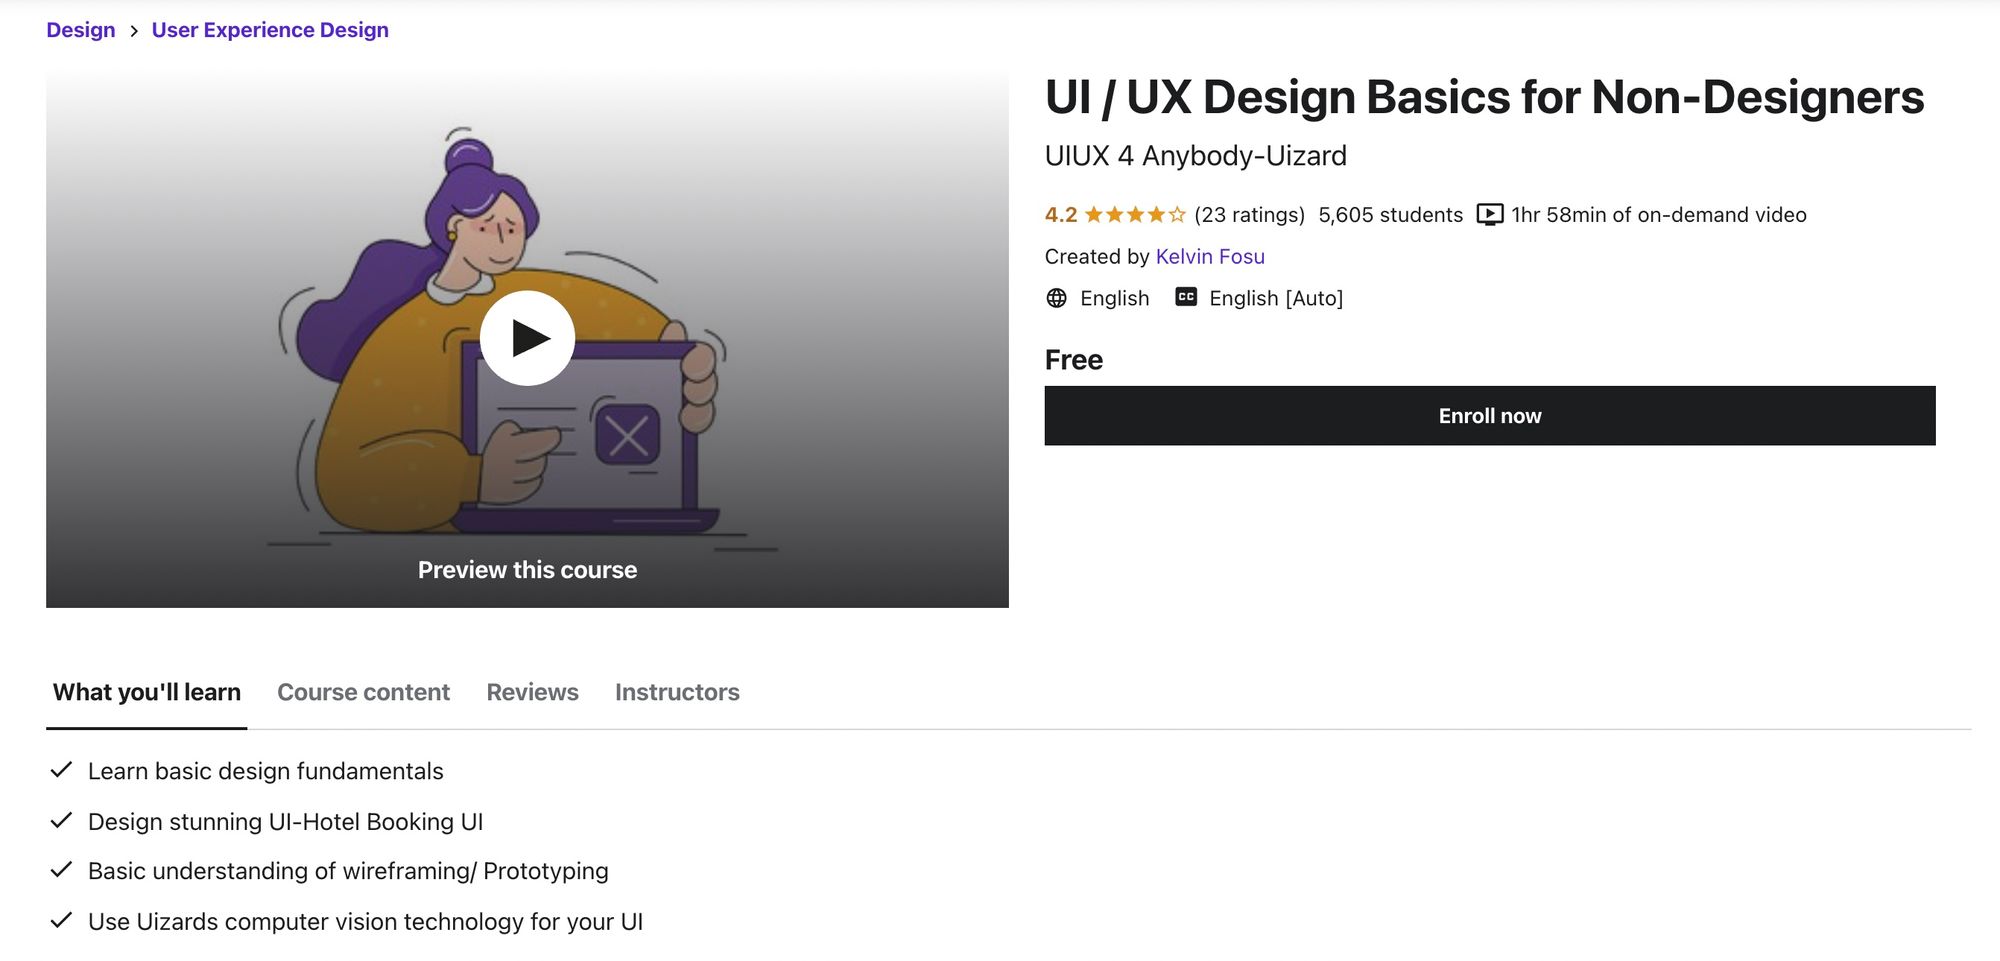 UI / UX Design Basics for Non-Designers on Udemy